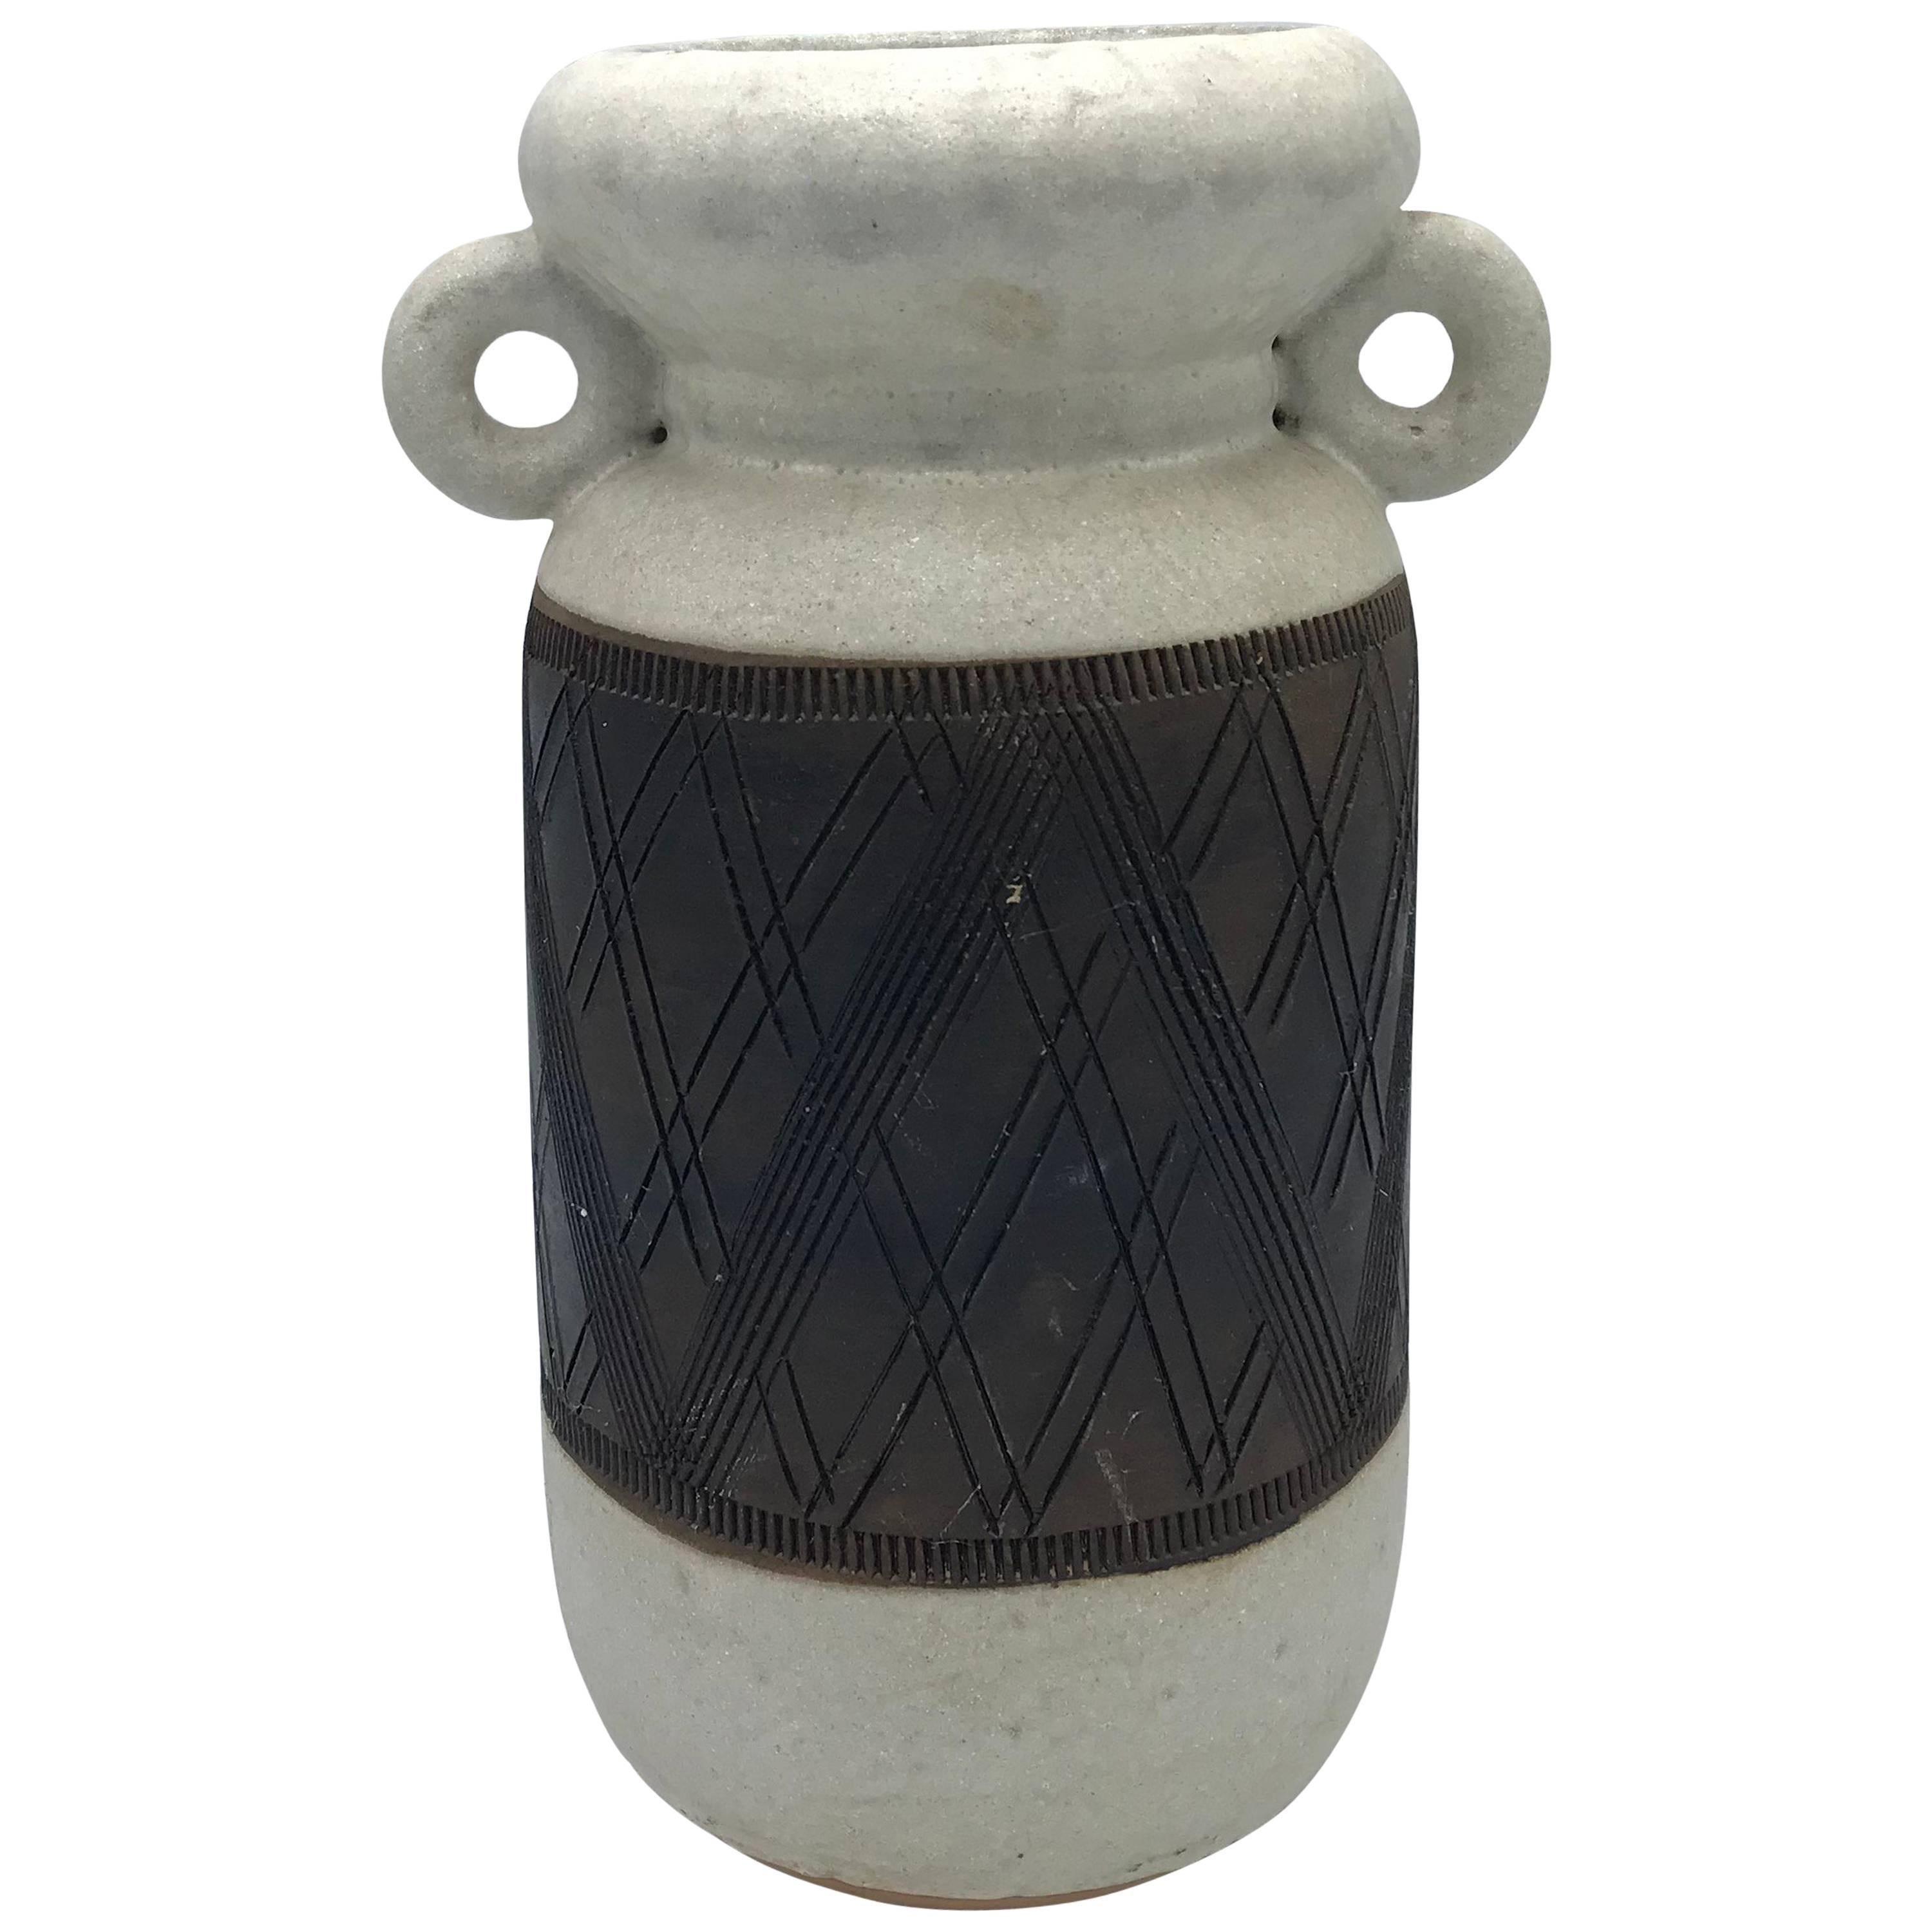 1960s Italian Bitossi Pottery Handled Vase with Geometric Plaid Motif